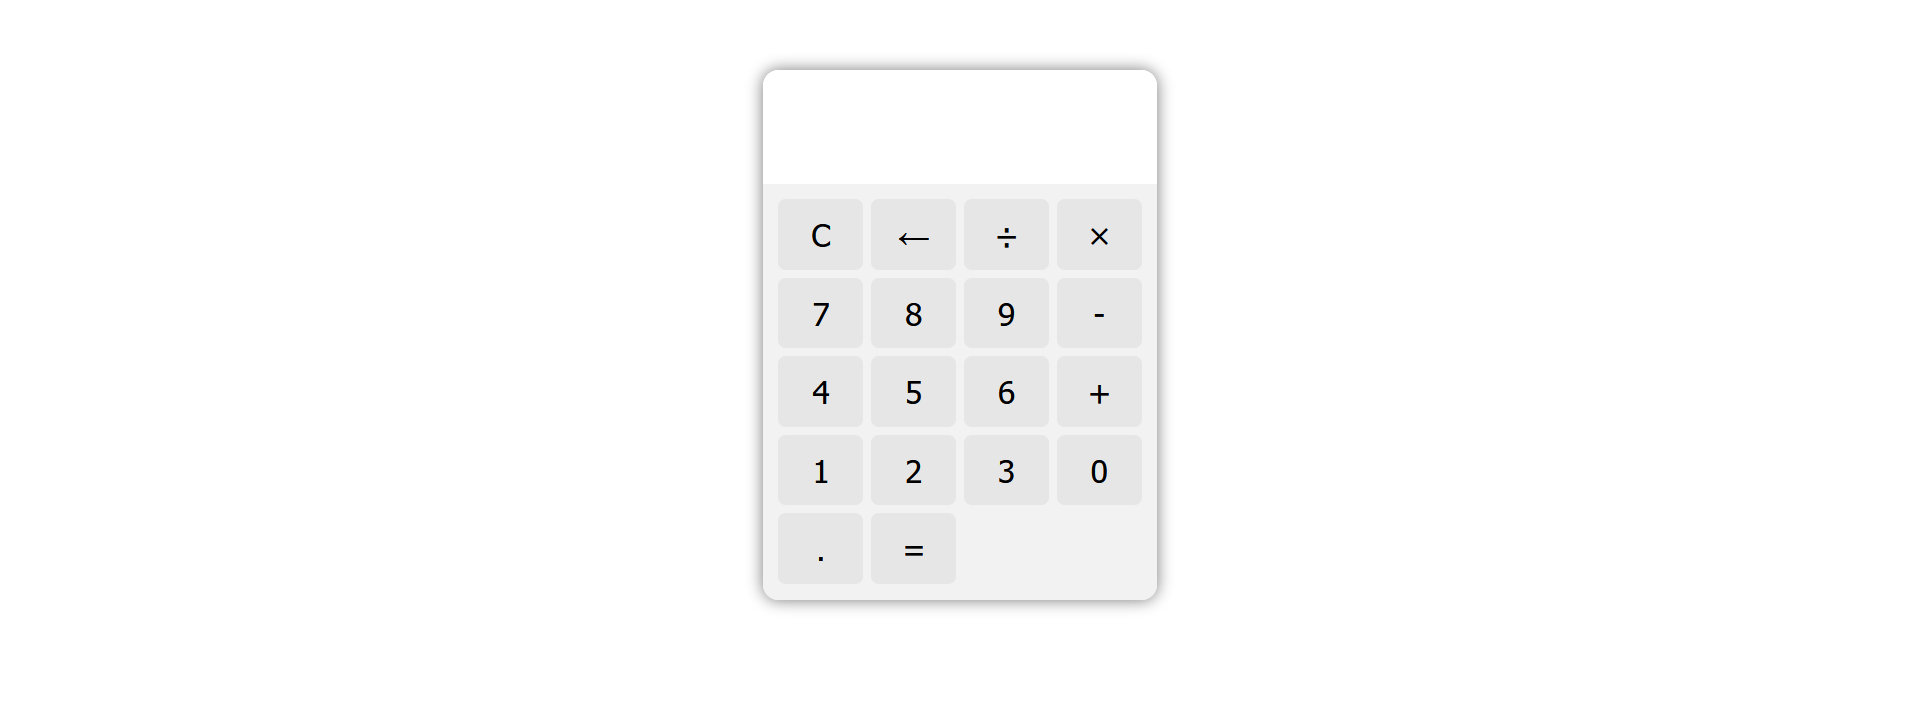 calculator using html css and javascript